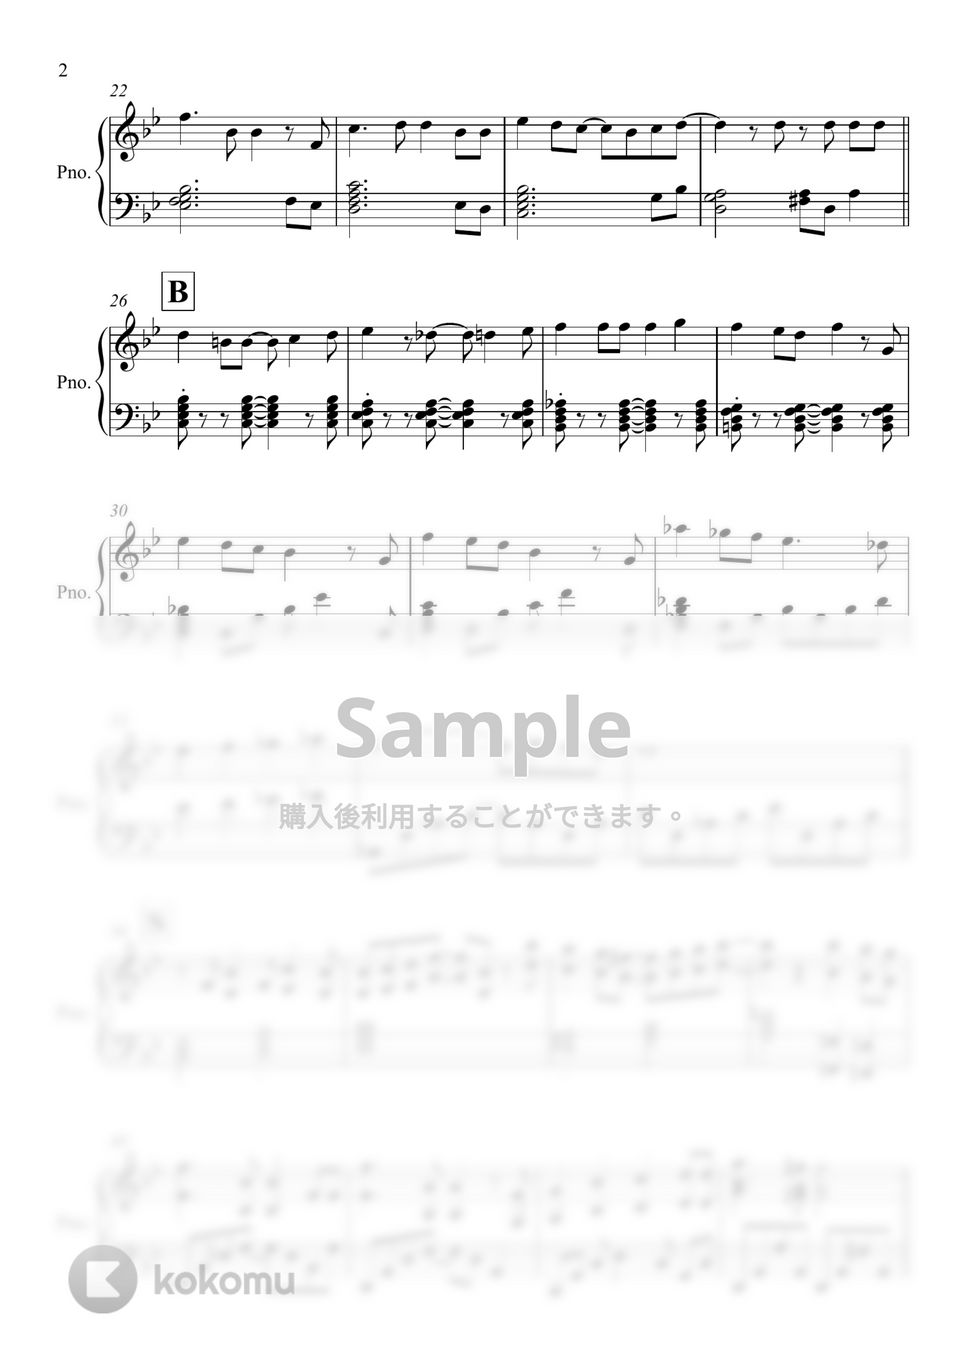 Official髭男dism - パラボラ (ピアノソロ) by 泉宏樹